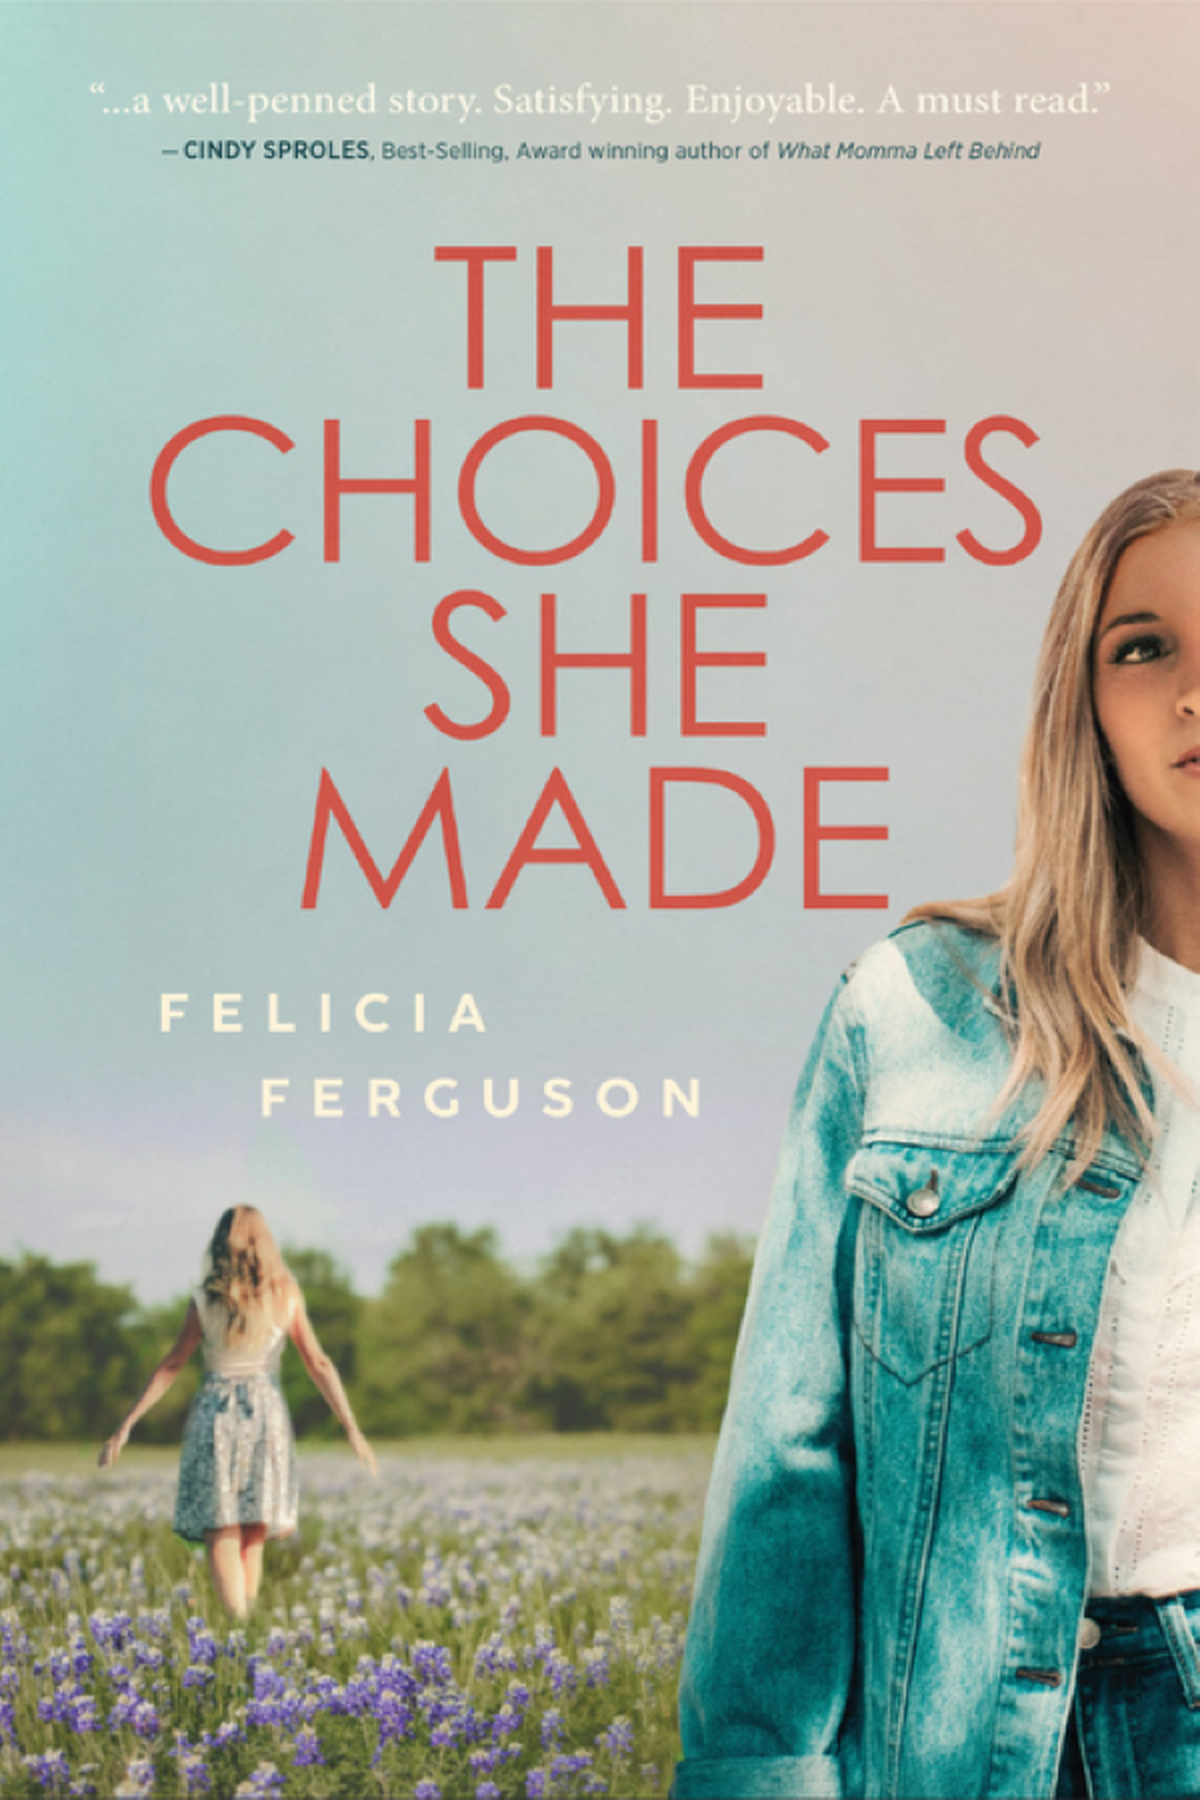 2. The Choices She Made by Felicia Ferguson